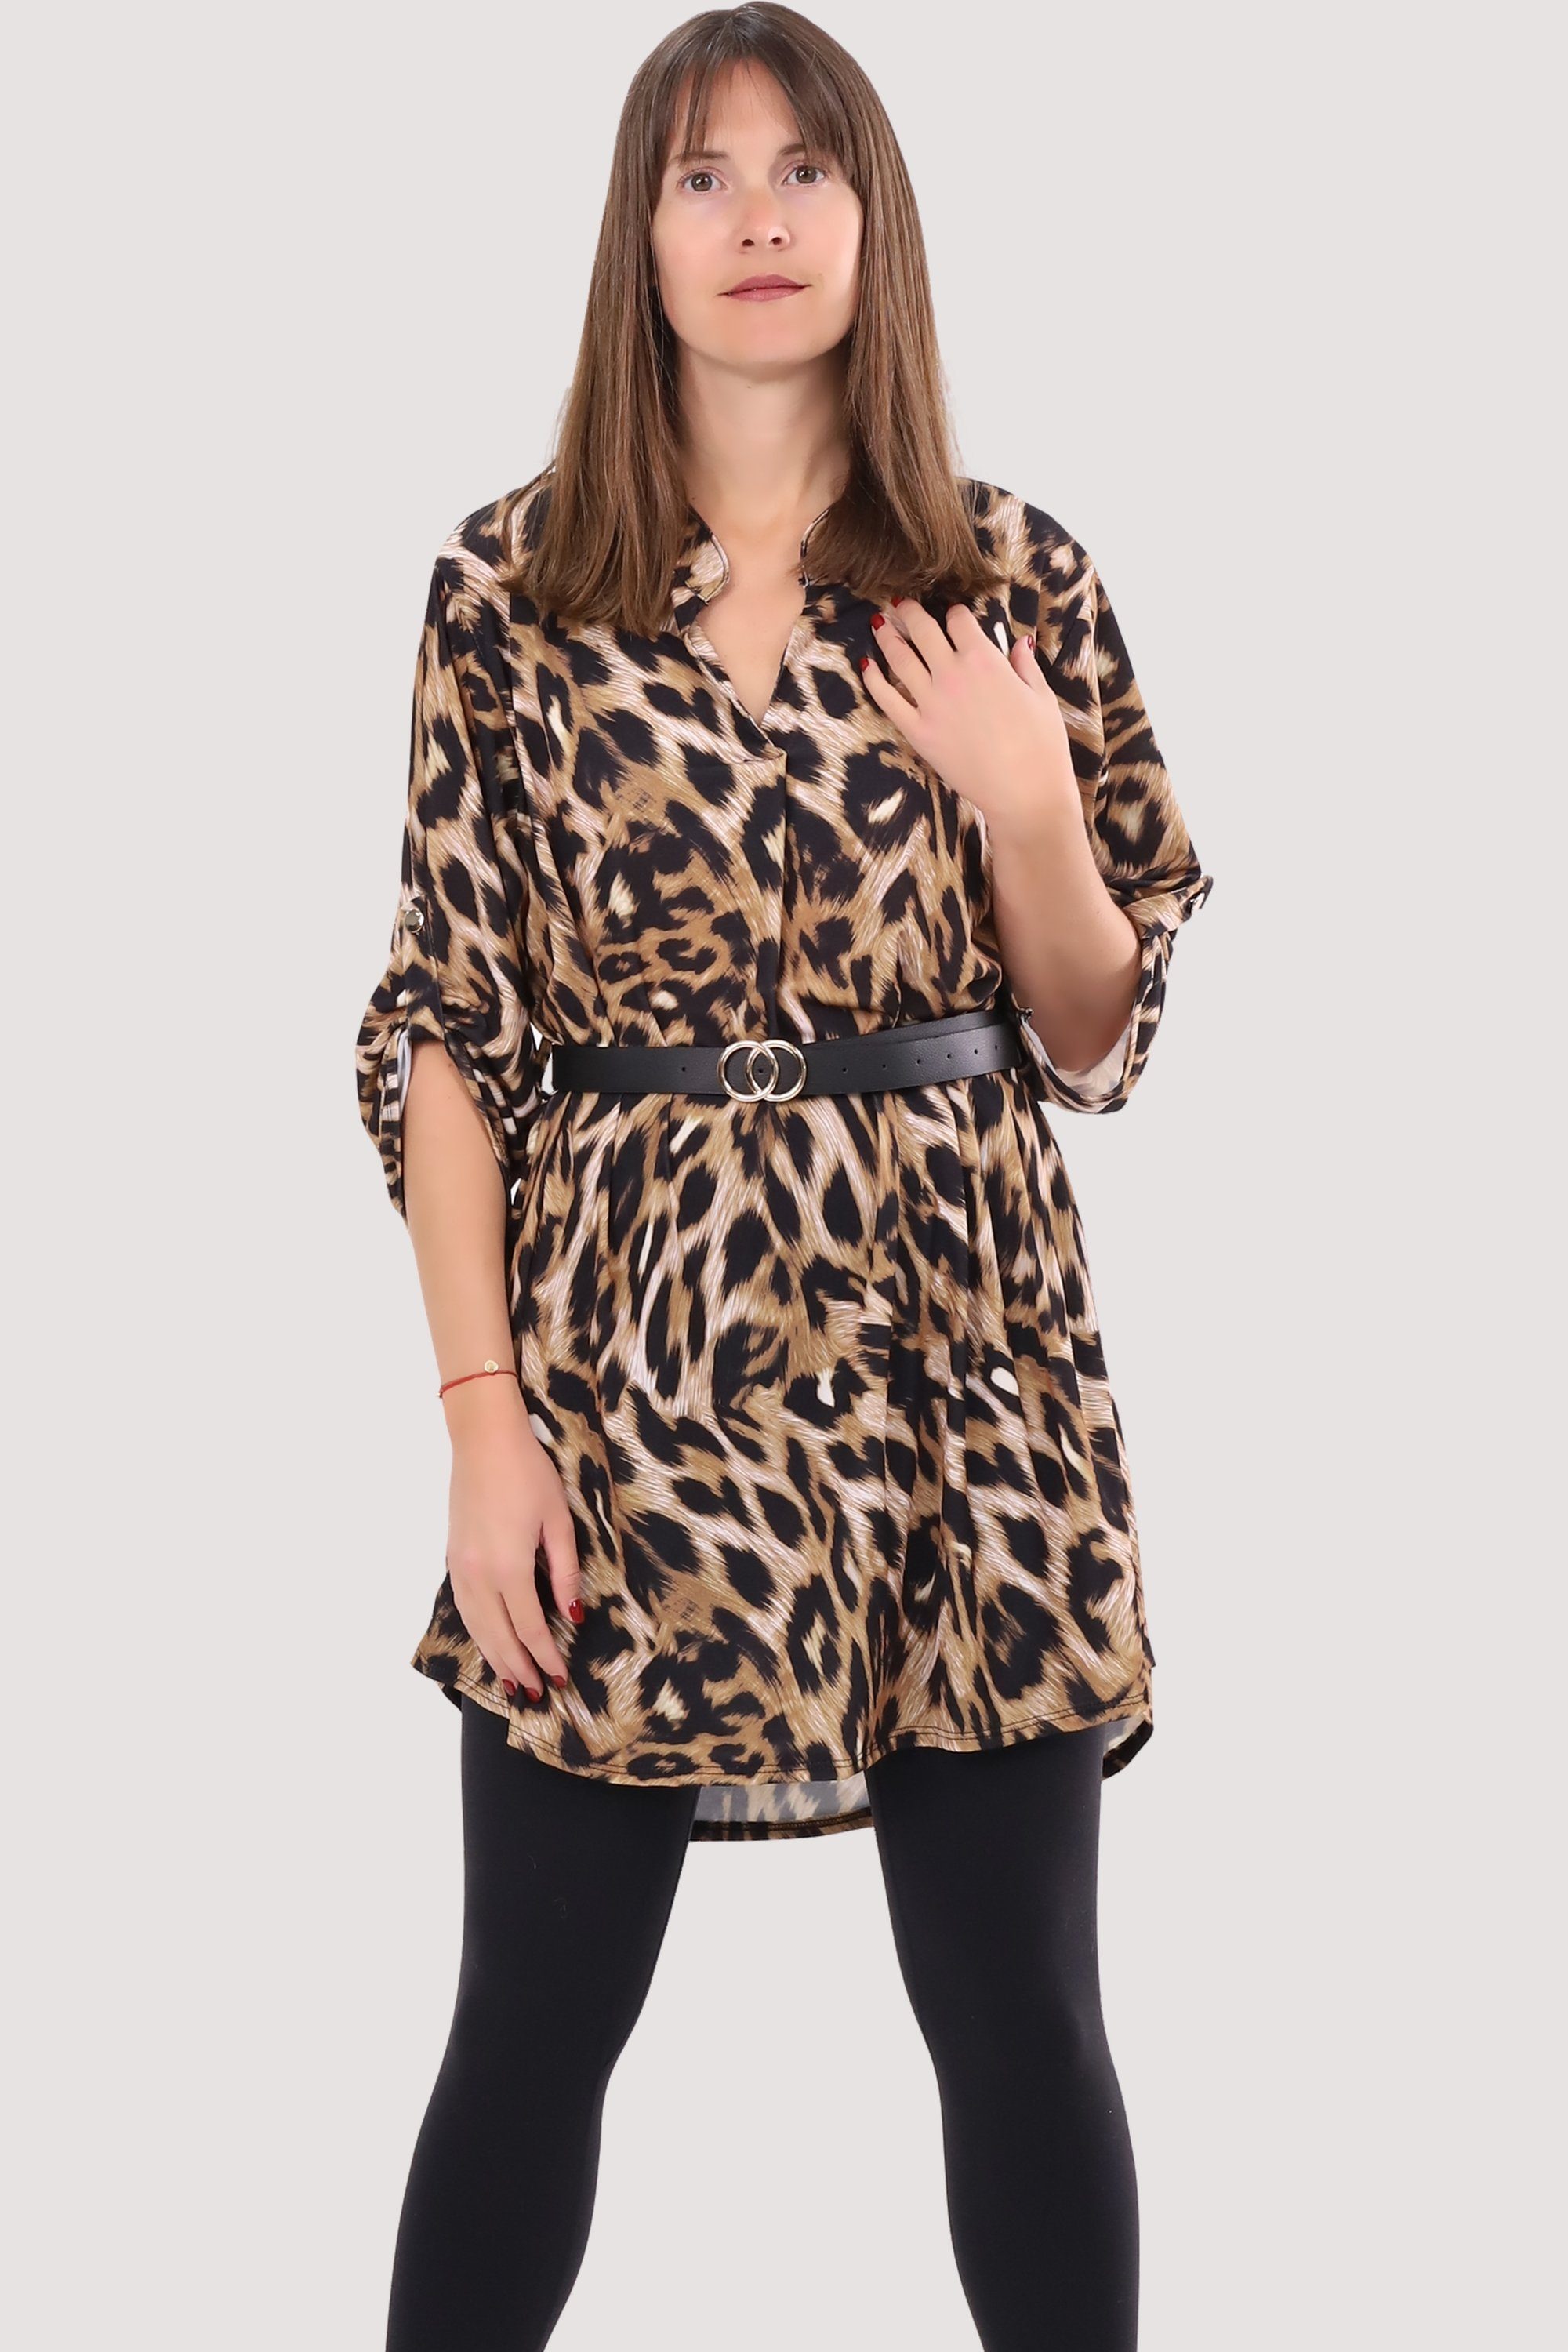 malito more Einheitsgröße mit 23203 Gürtel Gepard fashion Bluse Animalprint Tunika 3 Kleid than Druckkleid